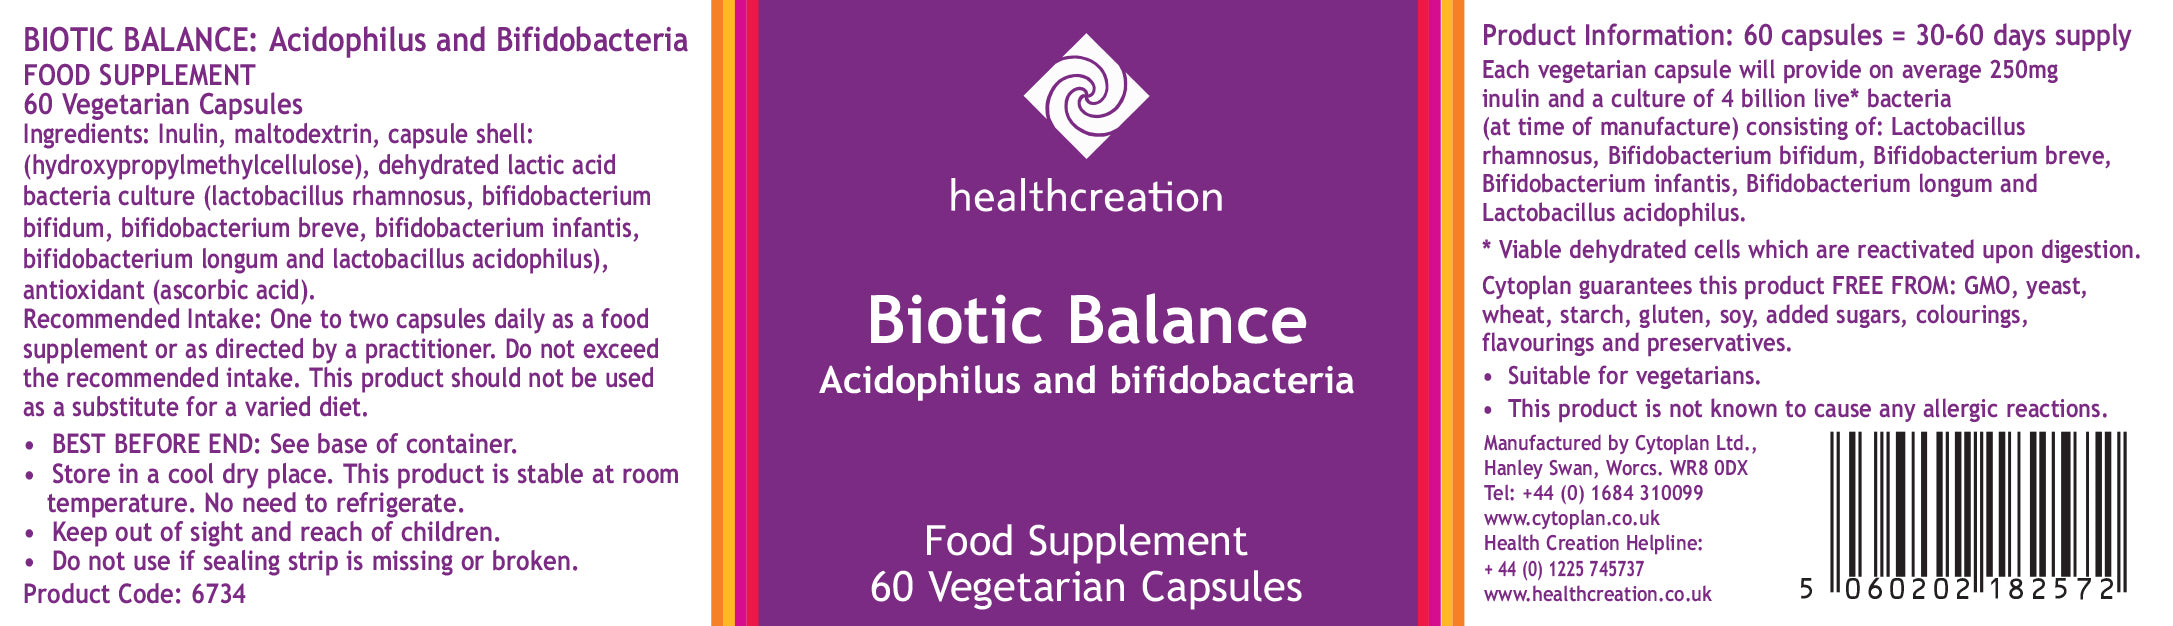 Cytoplan Health Creation Biotic Balance 60's